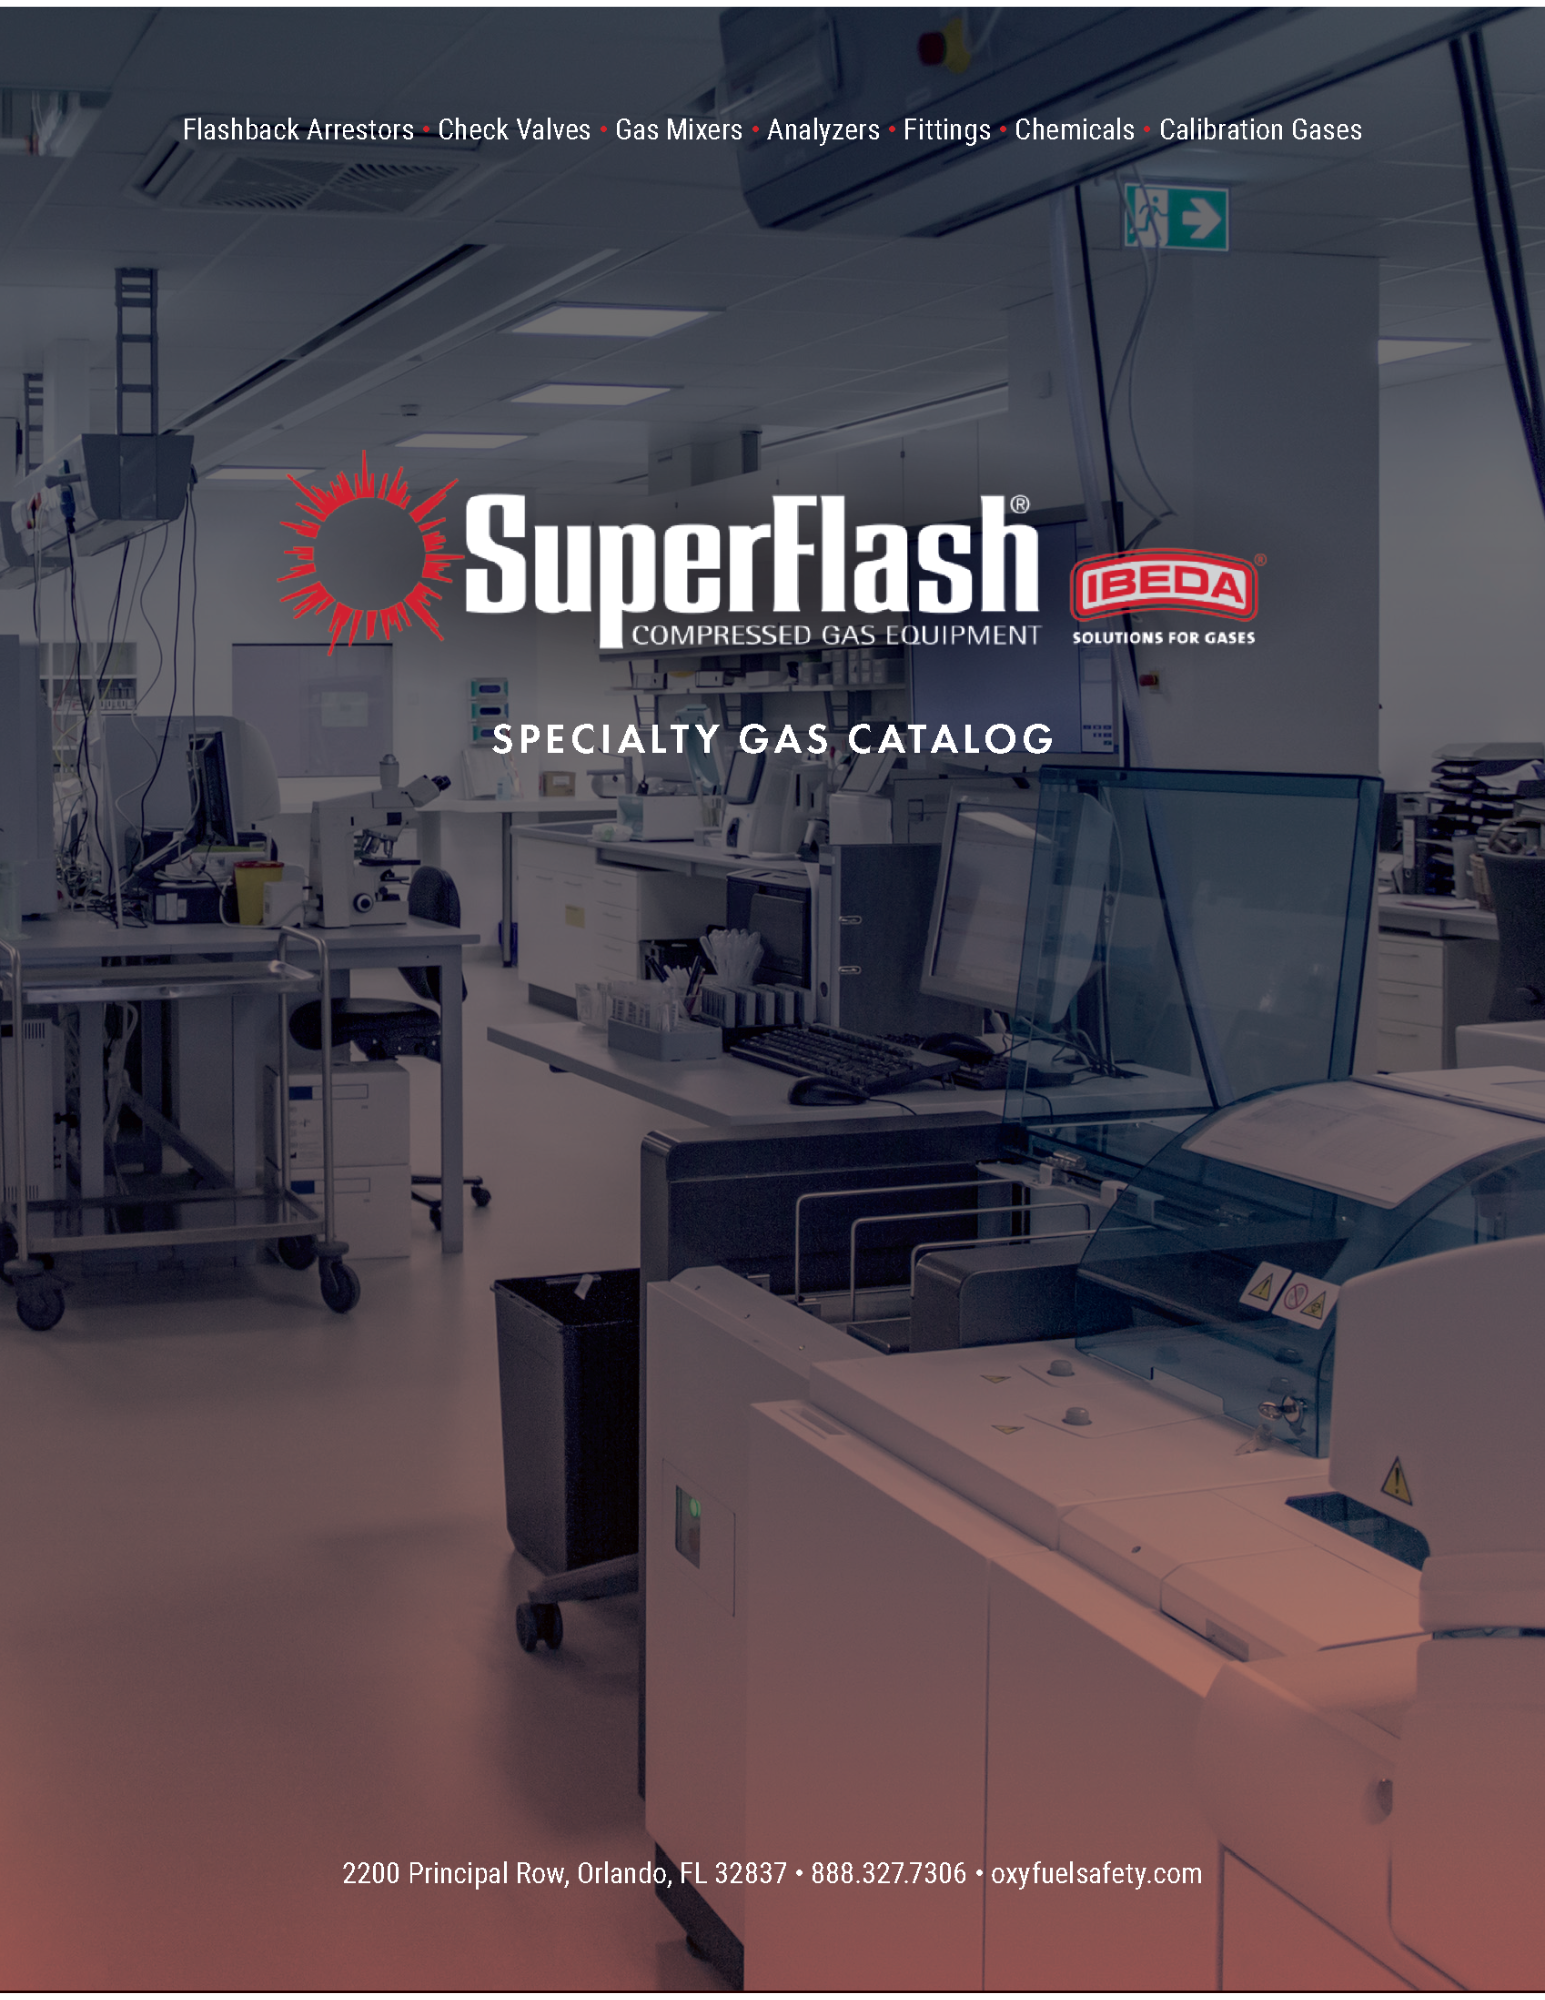 SuperFlash Specialty Gas Catalog